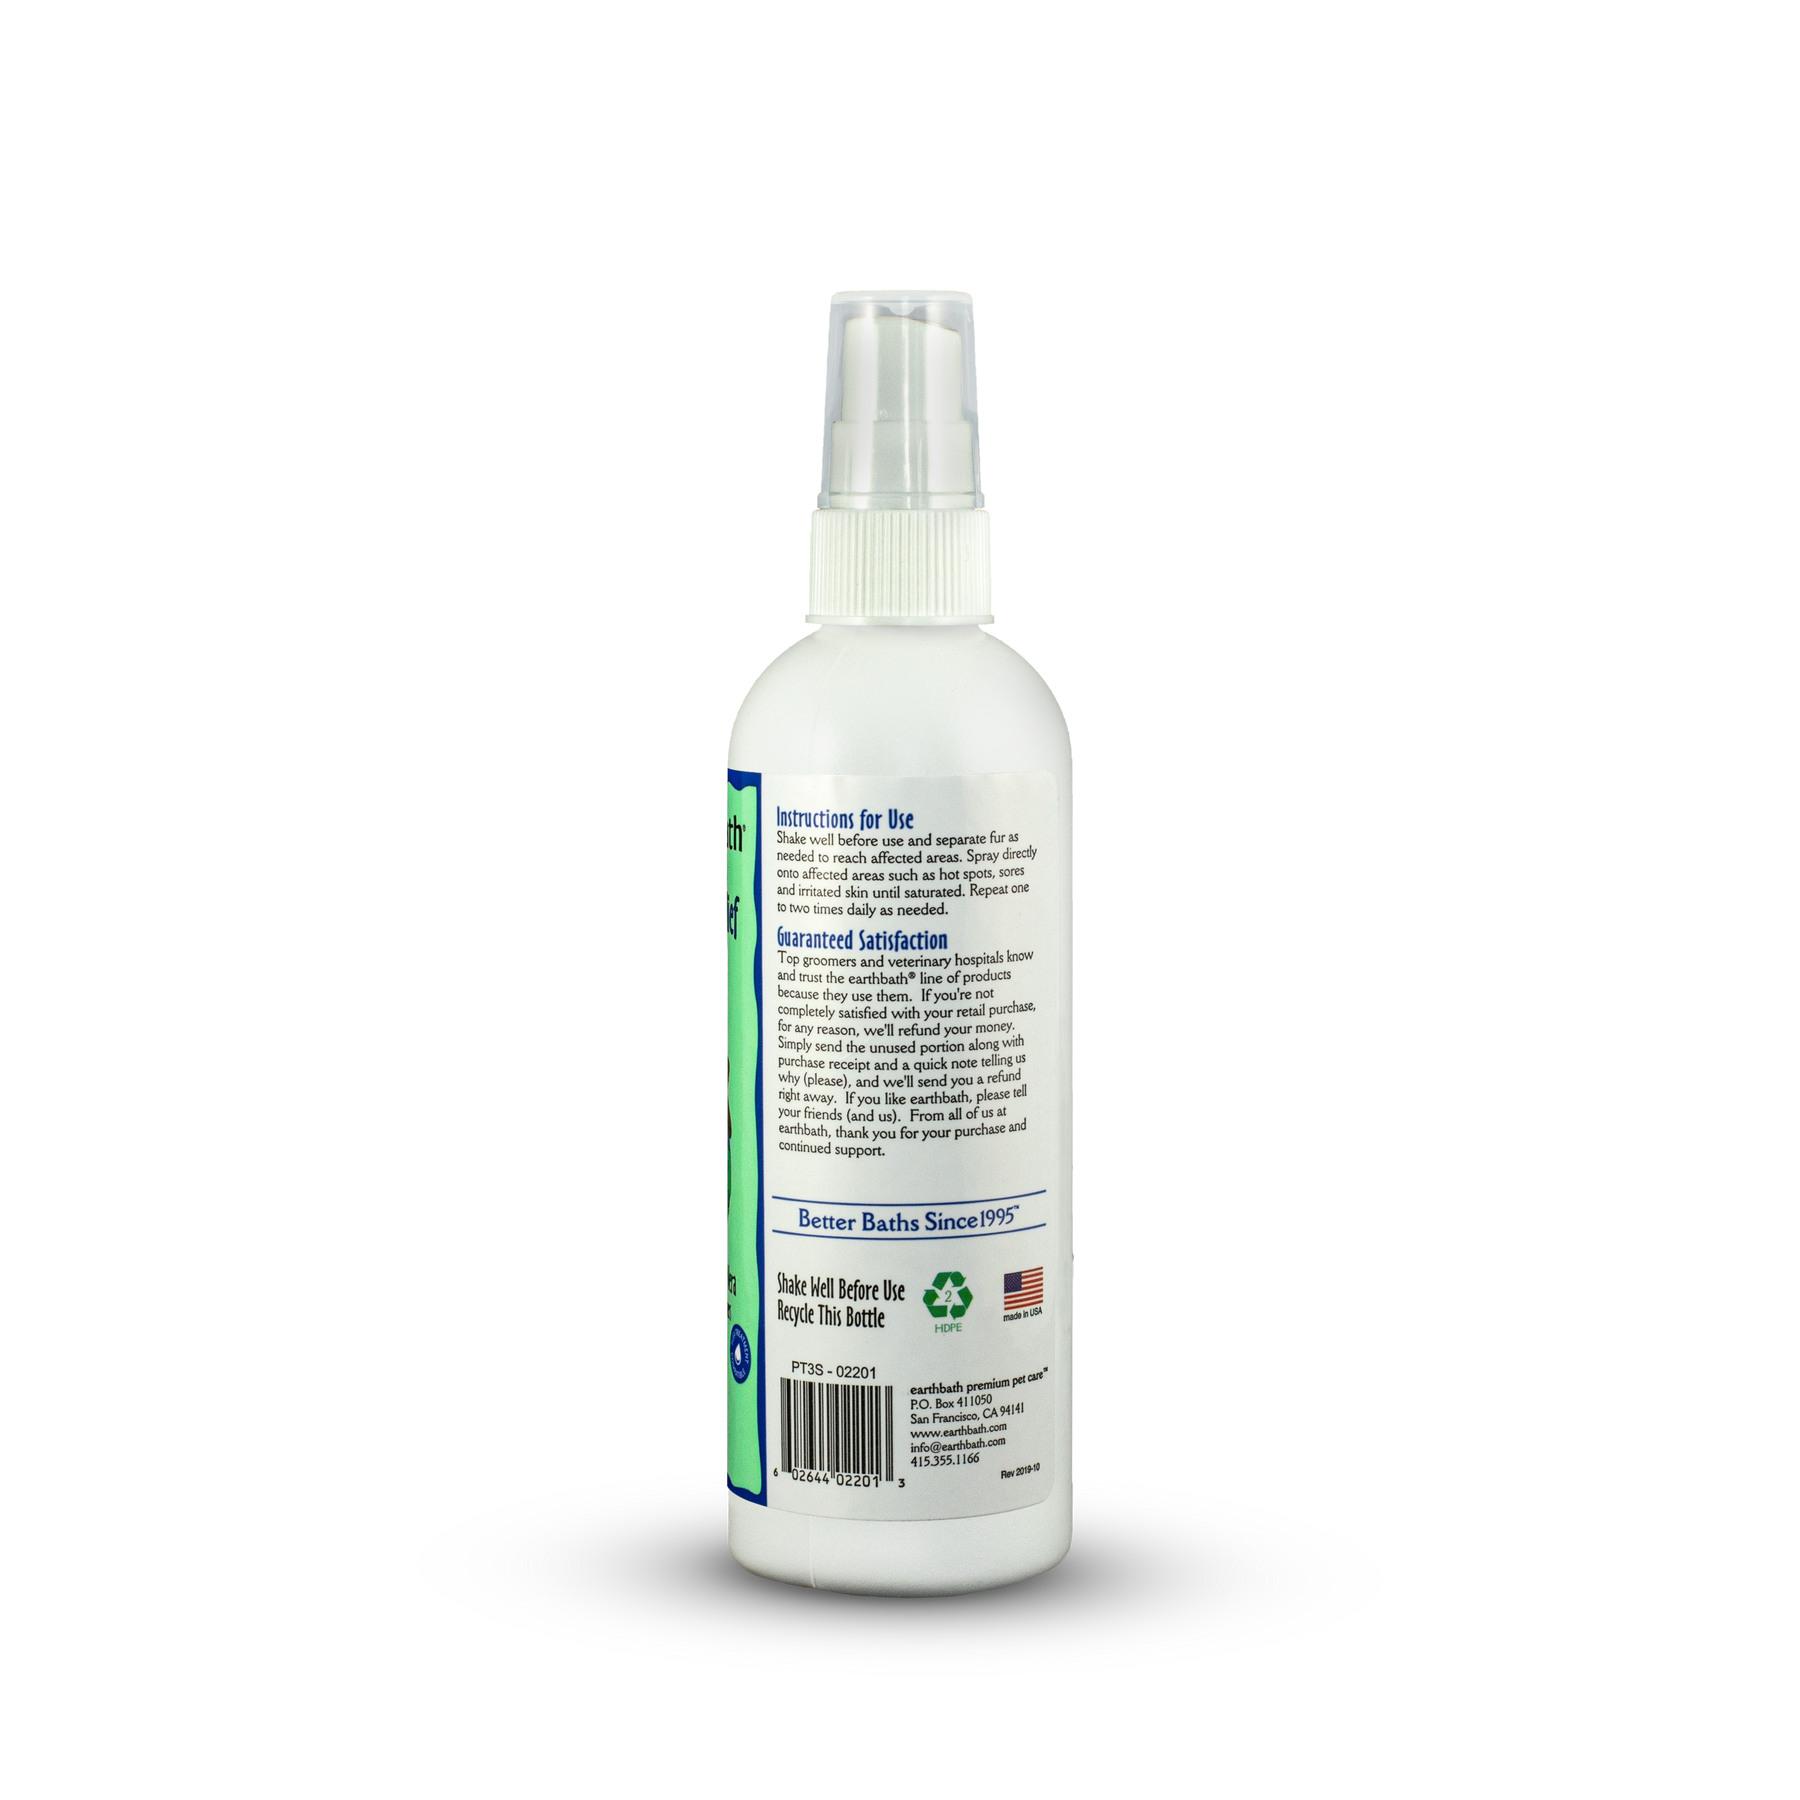 earthbath® Hot Spot Relief Spray, Tea Tree Oil & Aloe Vera, Made in USA, 8 oz pump spray